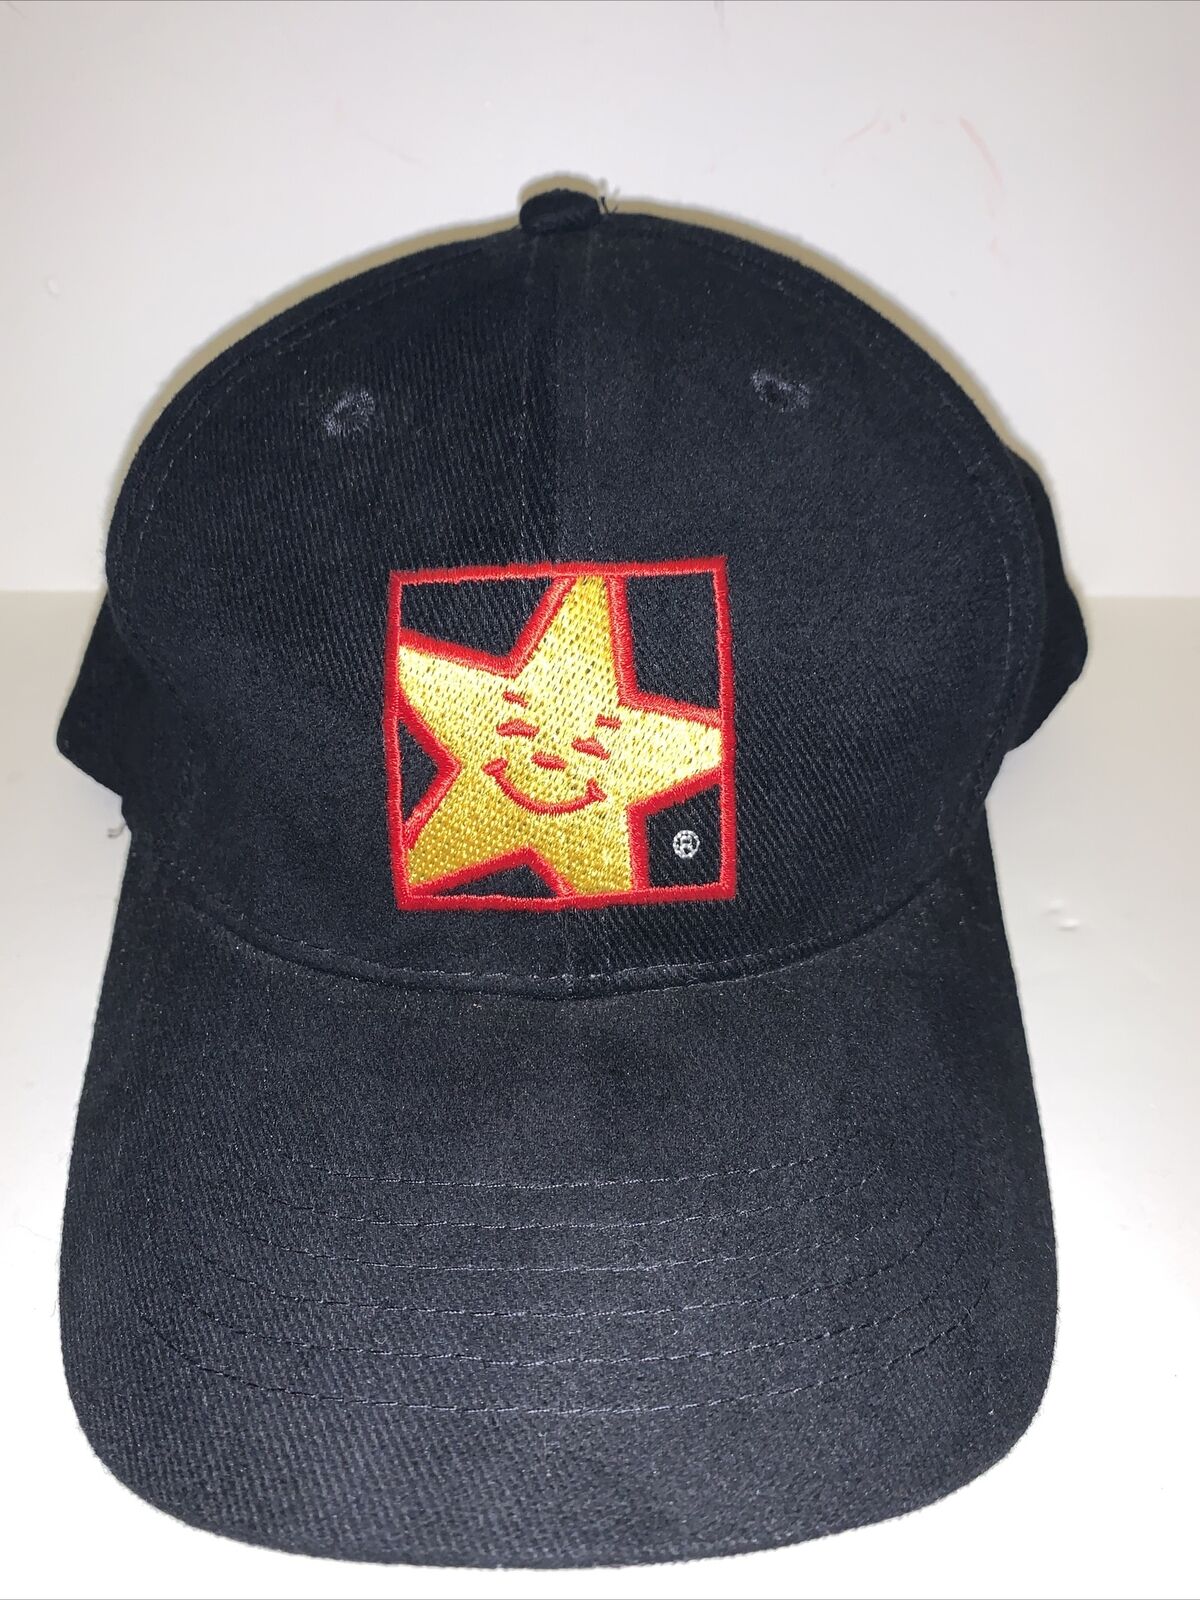 Black CARL'S Jr. Hardee’s Hamburgers Embroidered Logo Adjustable Baseball Hat